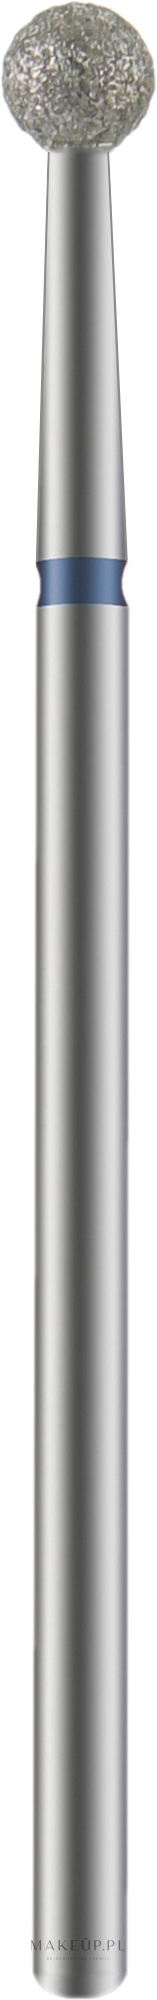 Frez diamentowy, kulka, niebieski, 3,5 mm - Staleks PRO Expert Diamond Nail Drill Bit Ball Blue Head 3.5 mm — Zdjęcie 1 szt.